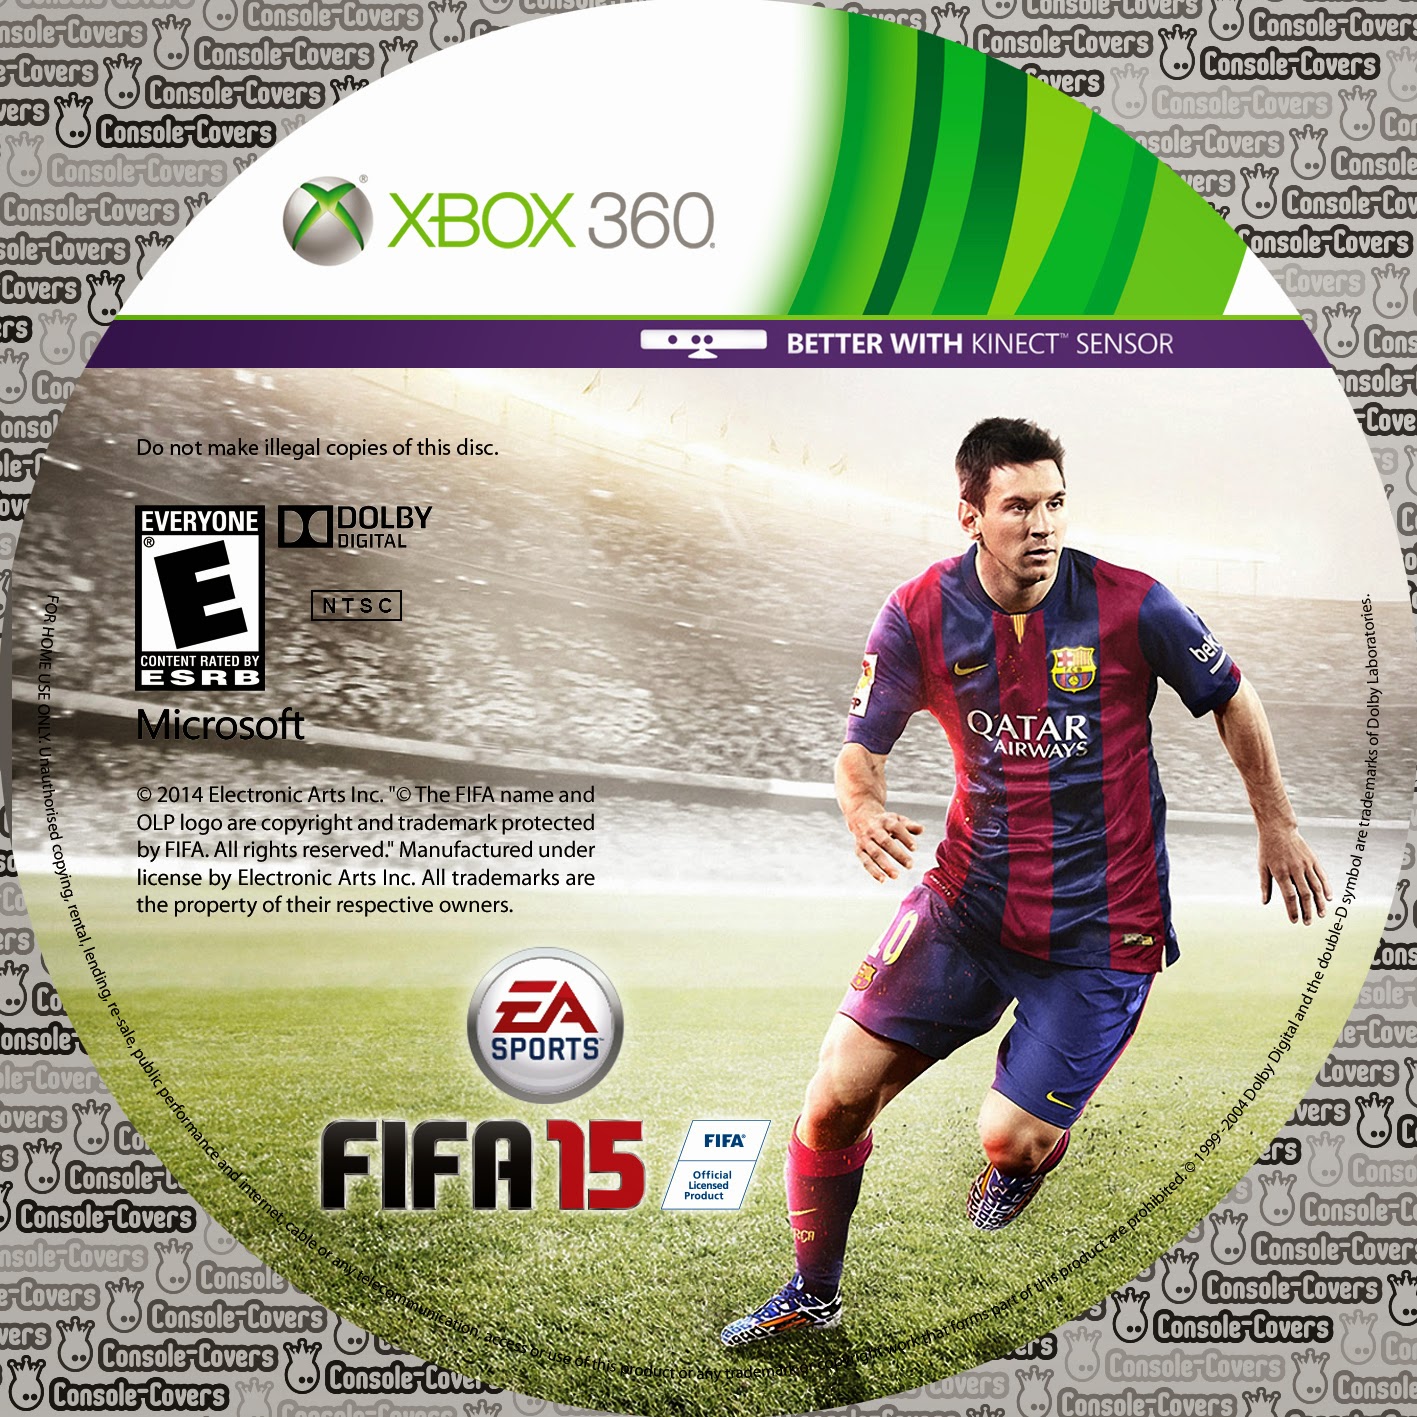 360 fifa. FIFA 15 Xbox 360 диск. FIFA 14 Xbox 360 обложка для дисков. Диск FIFA 15 Kinect Xbox 360. ФИФА 15 хбокс 360 коробка.